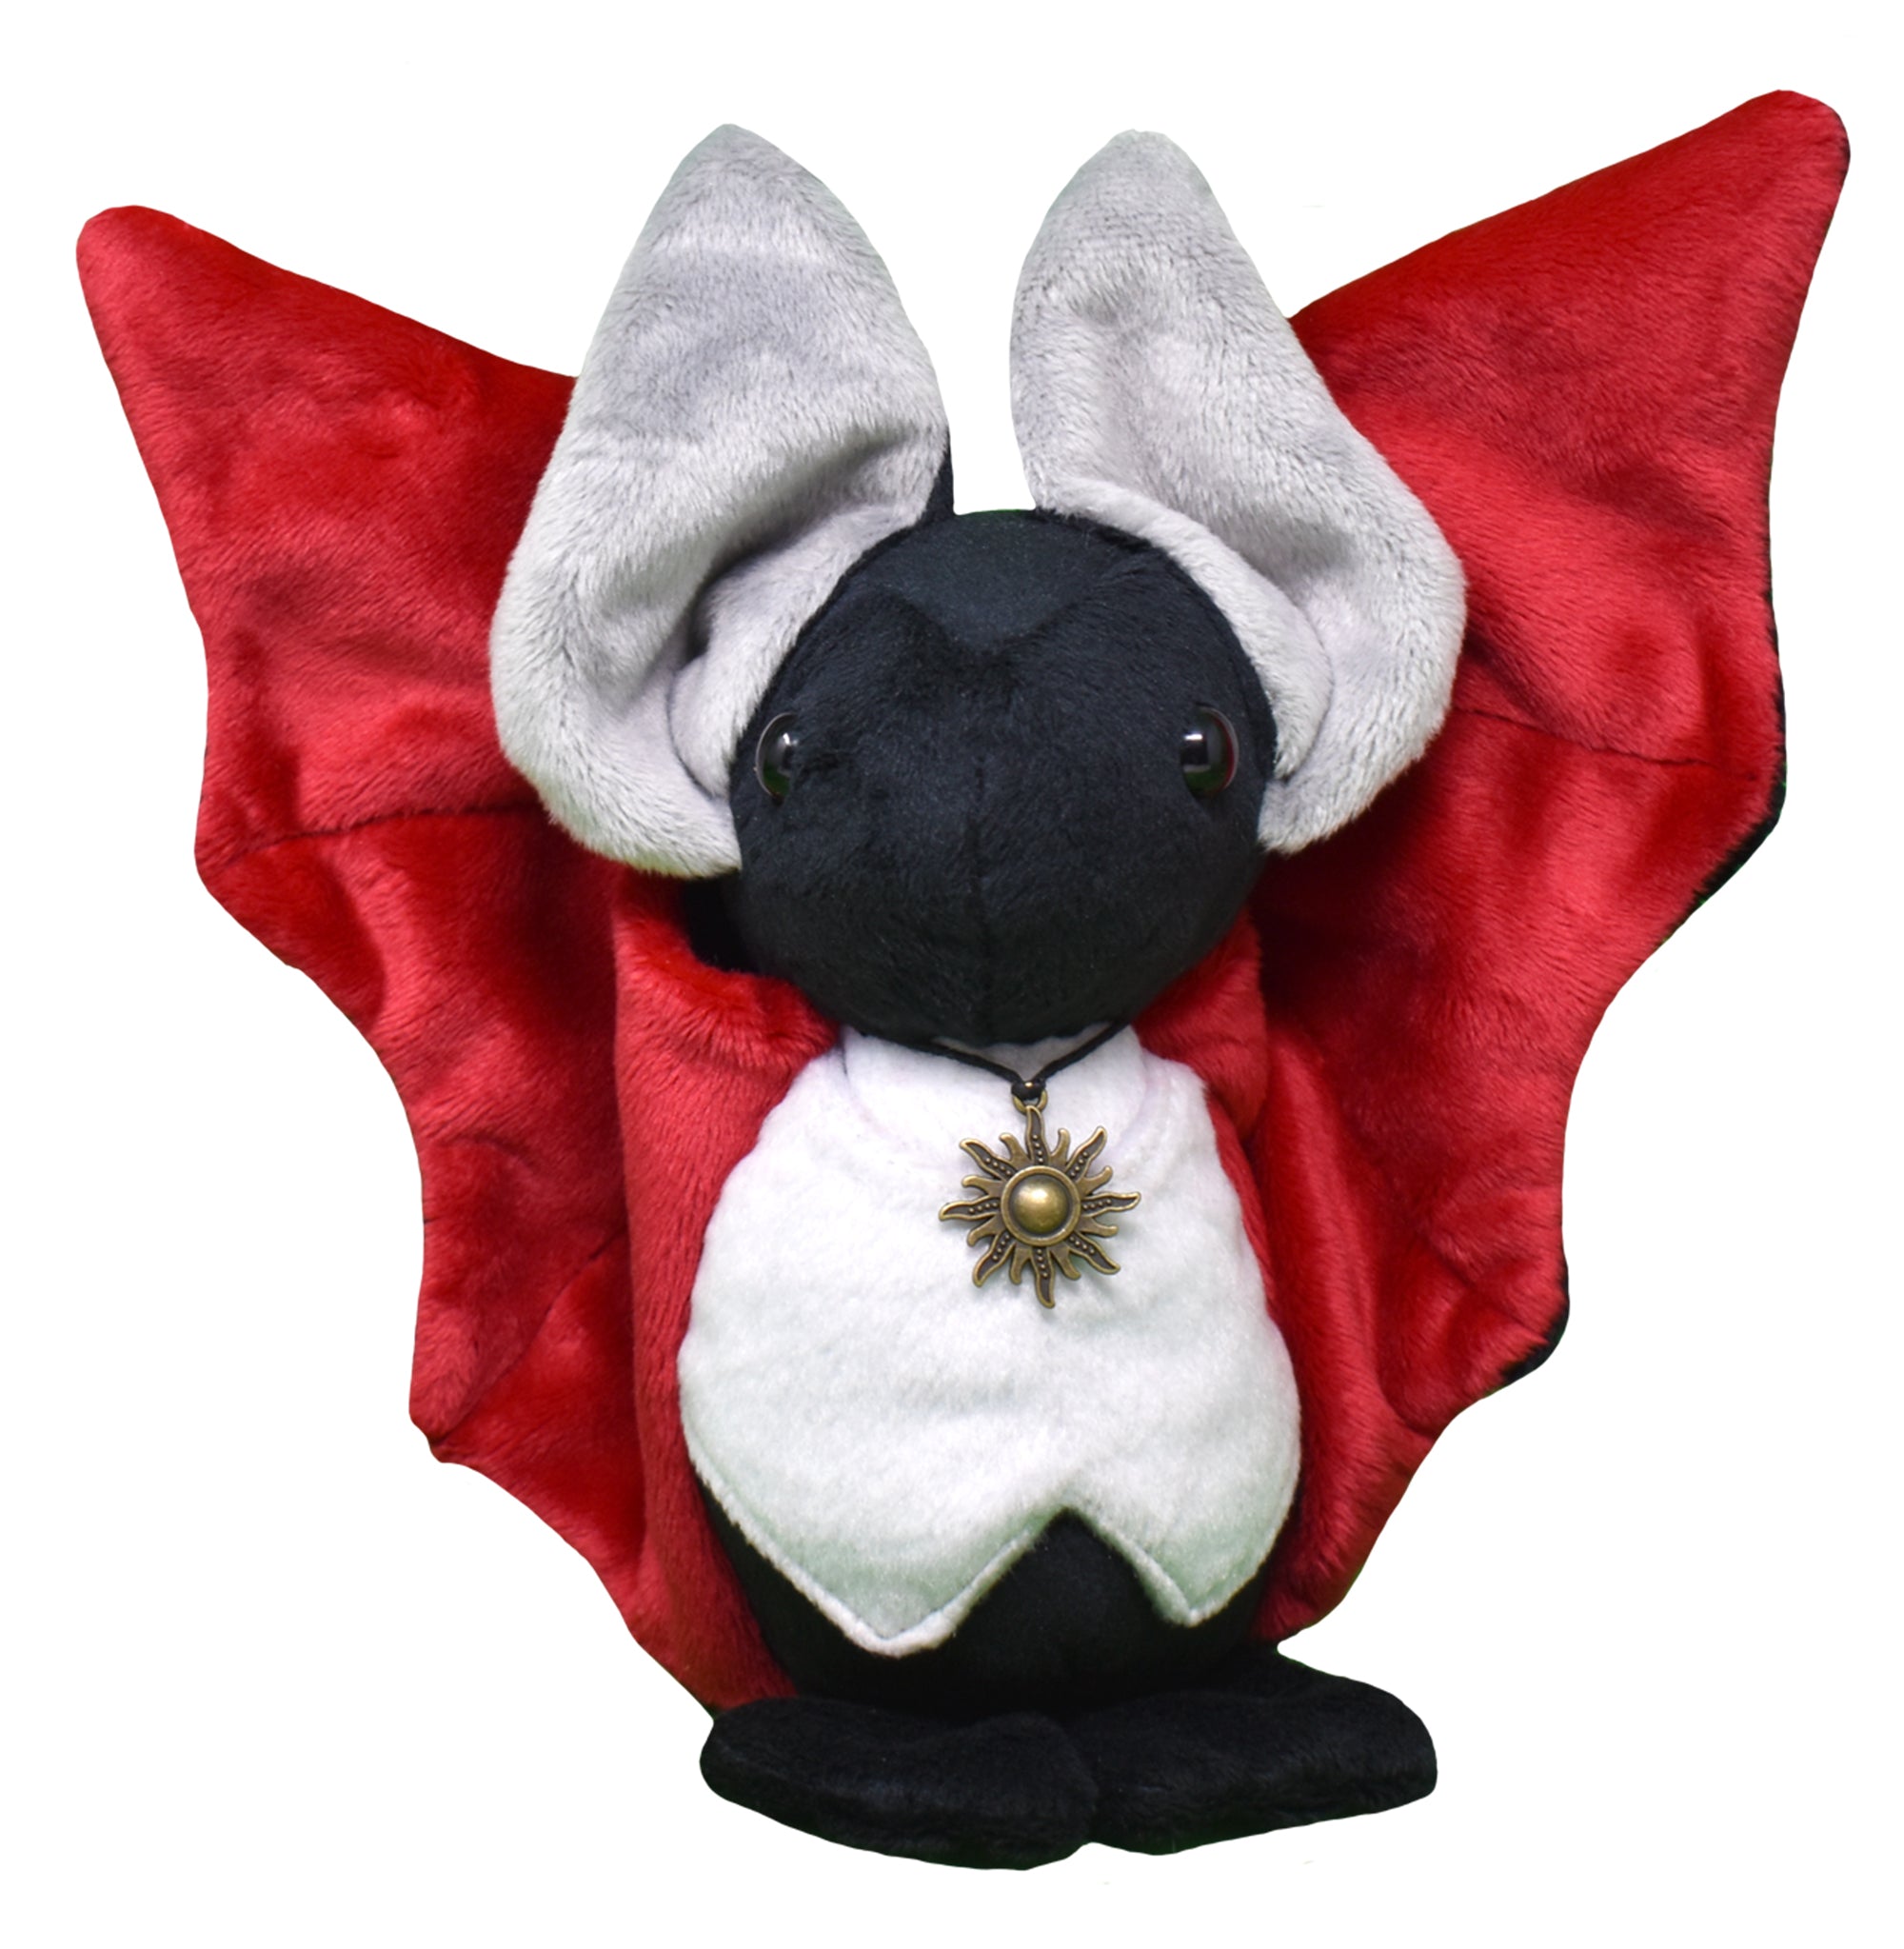  Handmade plush/Vampire Bat plush/handsewn dolls : Handmade  Products